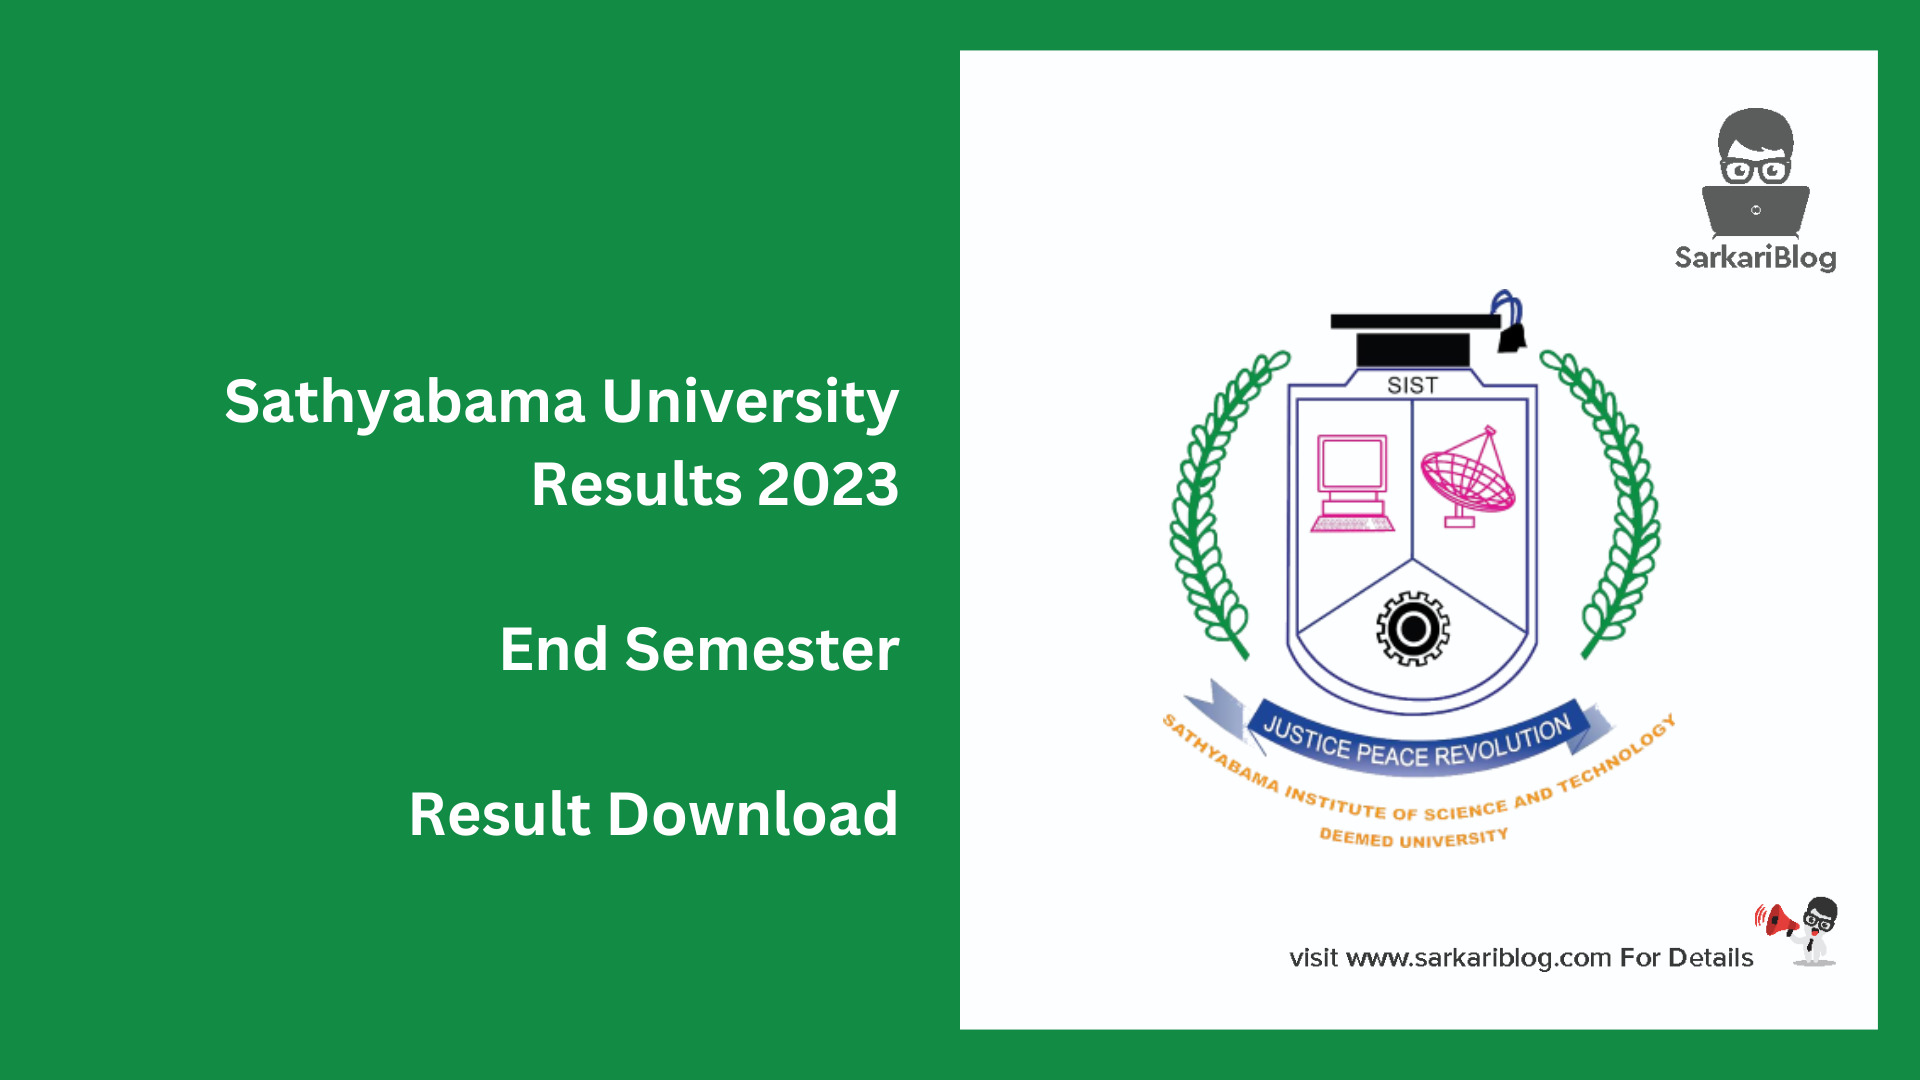 Sathyabama University Results 2023